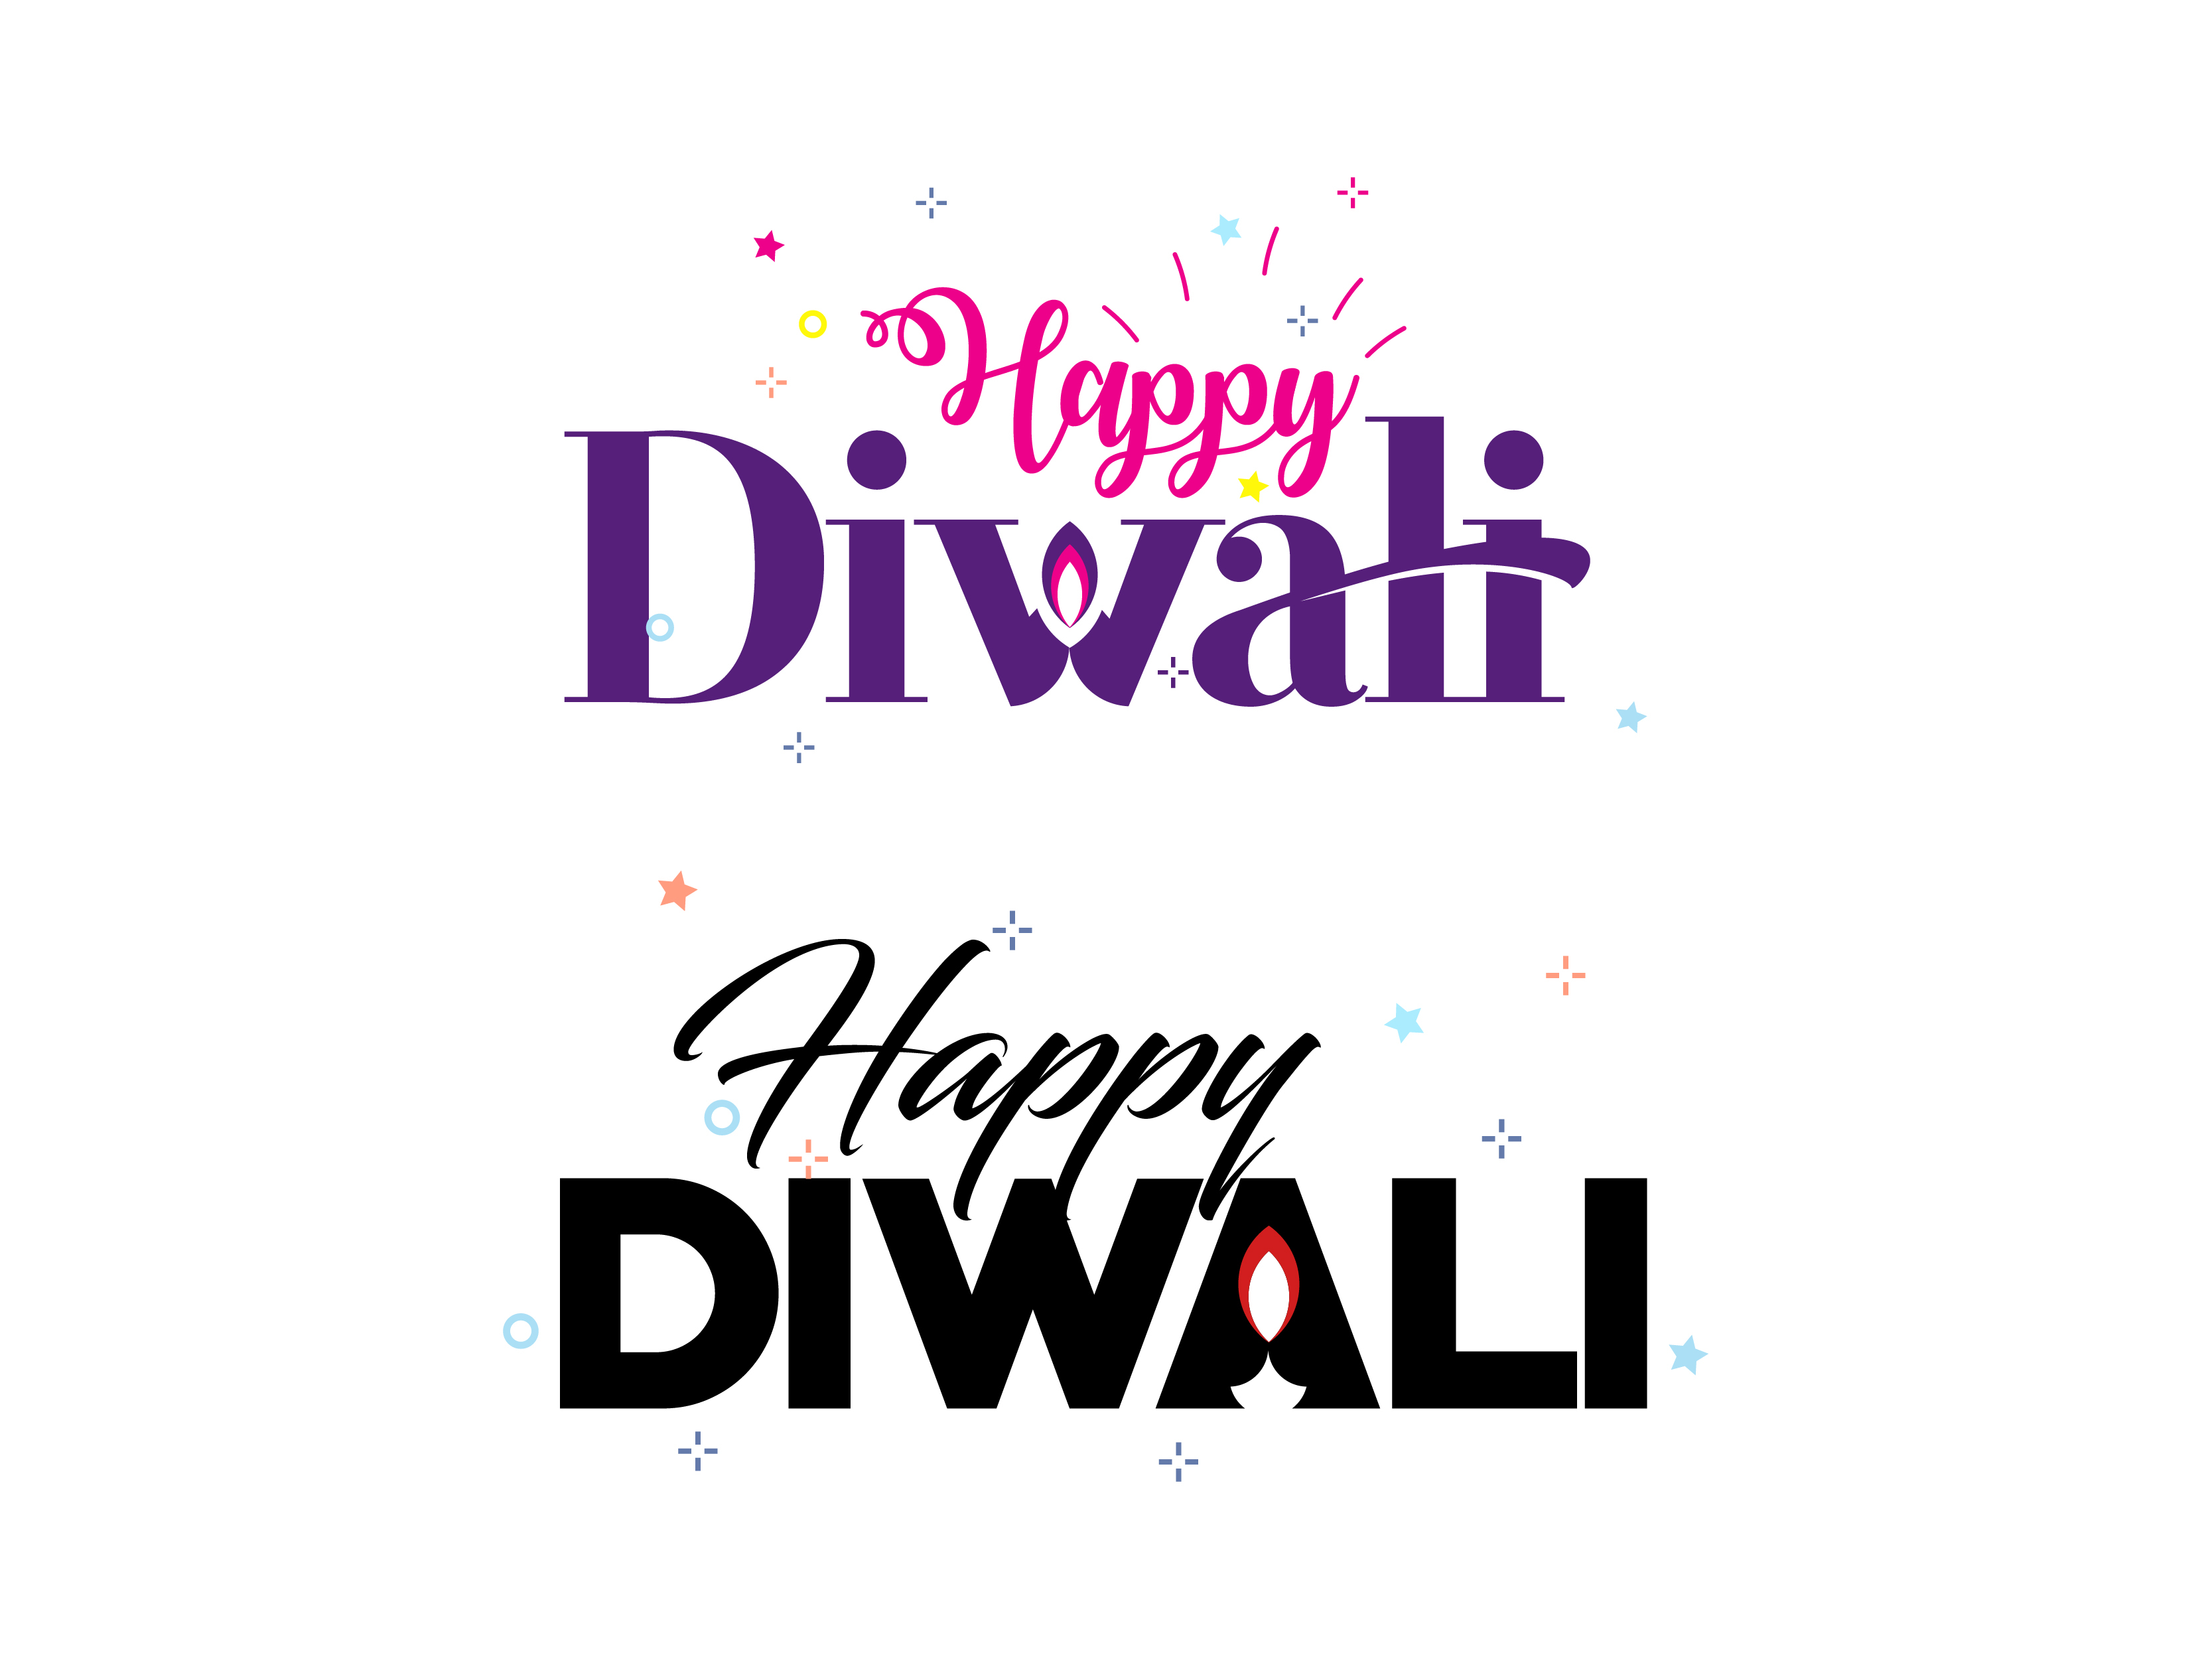 Create Deepavali|Diwali wishes image with name